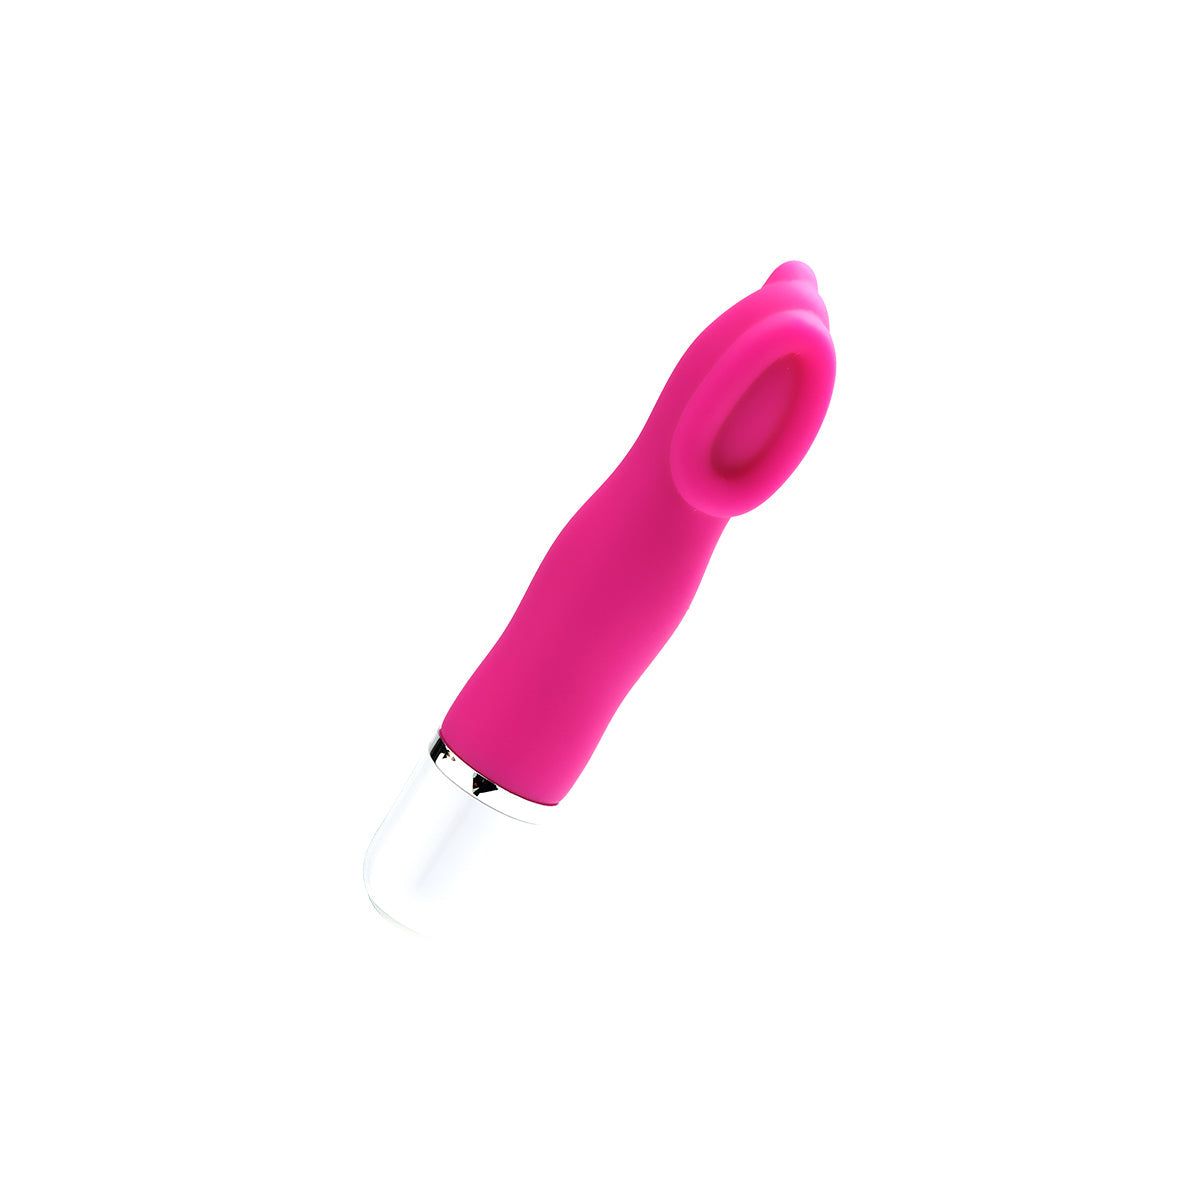 Vedo Luv Mini Vibrator - Pleasure Unleashed! Hot in Bed Pink